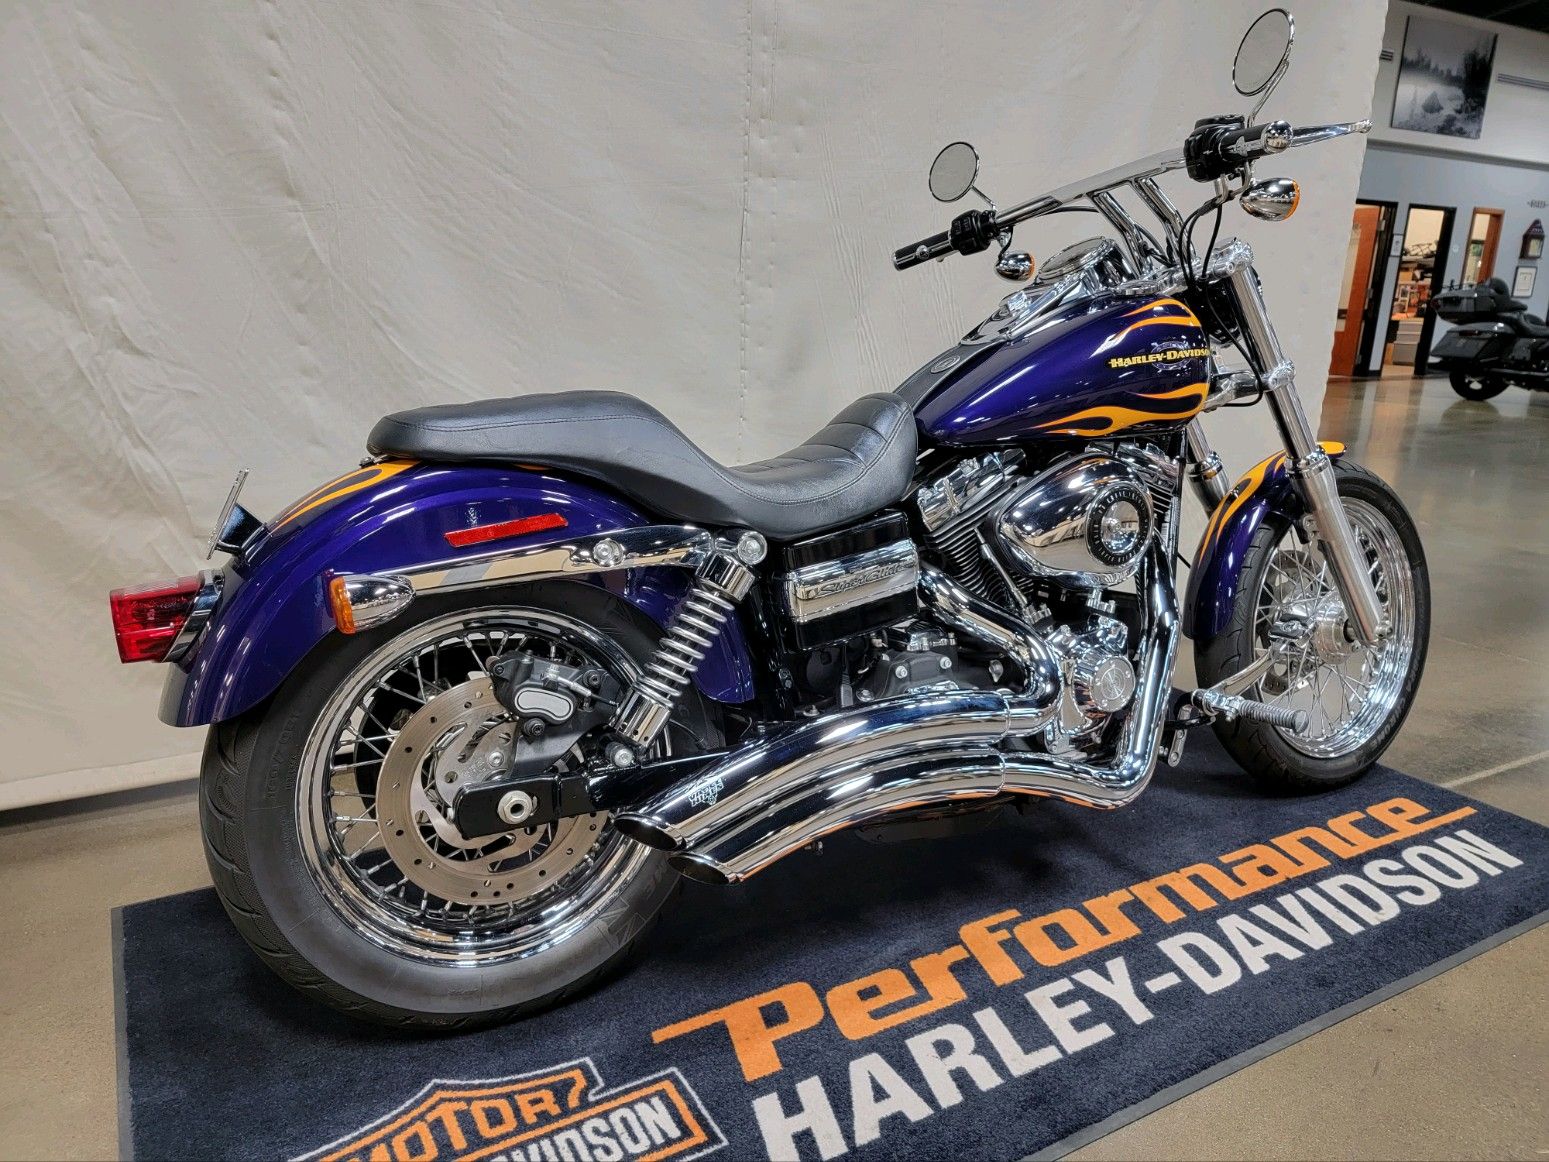 2012 Harley-Davidson Dyna® Super Glide® Custom in Syracuse, New York - Photo 3